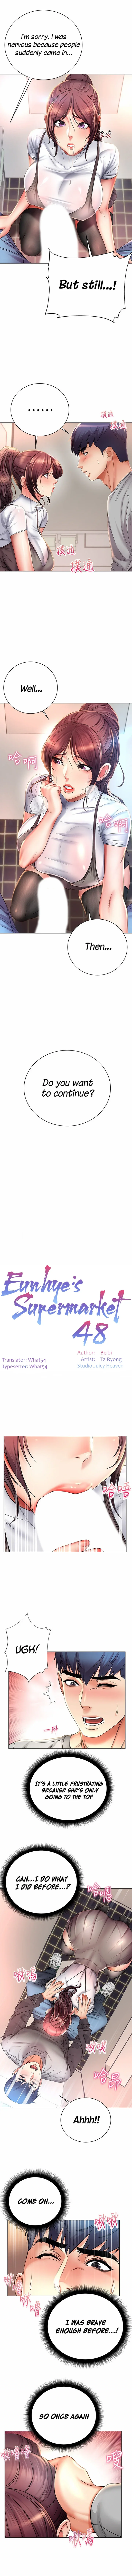 eunhye8217s-supermarket-chap-48-1